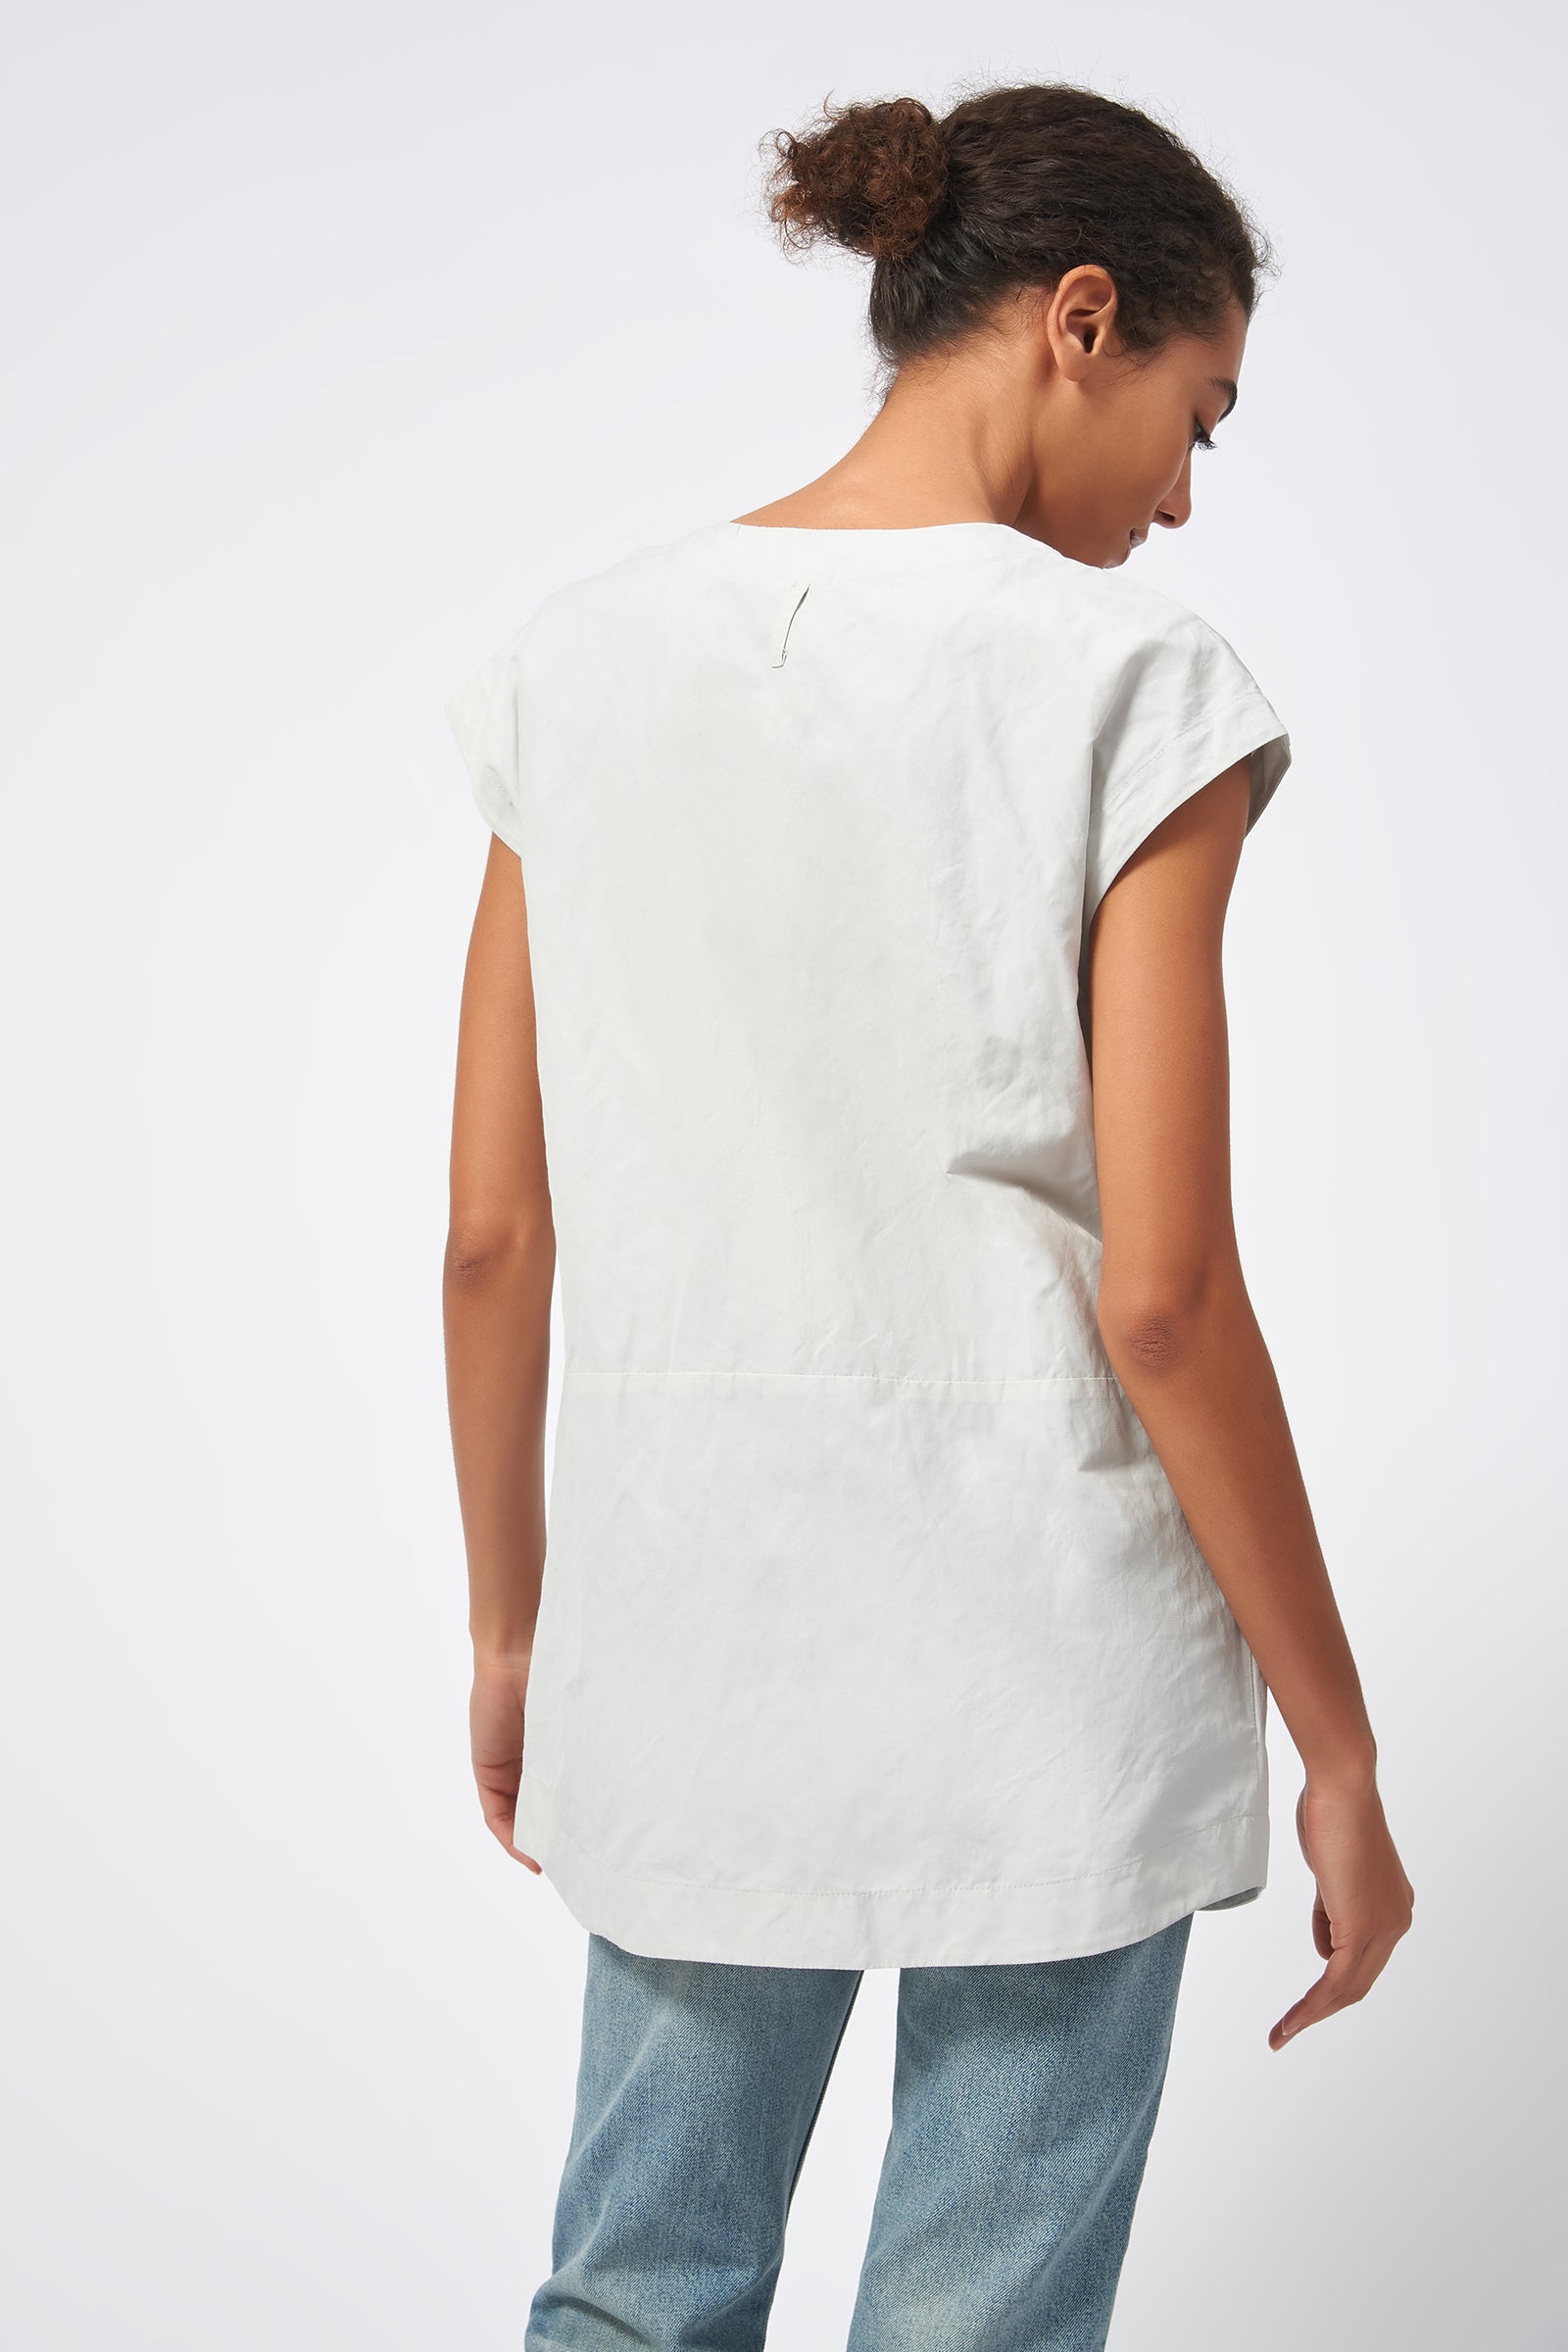 Kal Rieman Seam Pocket Tunic in Stone Cotton Nylon on Model Front View Crop